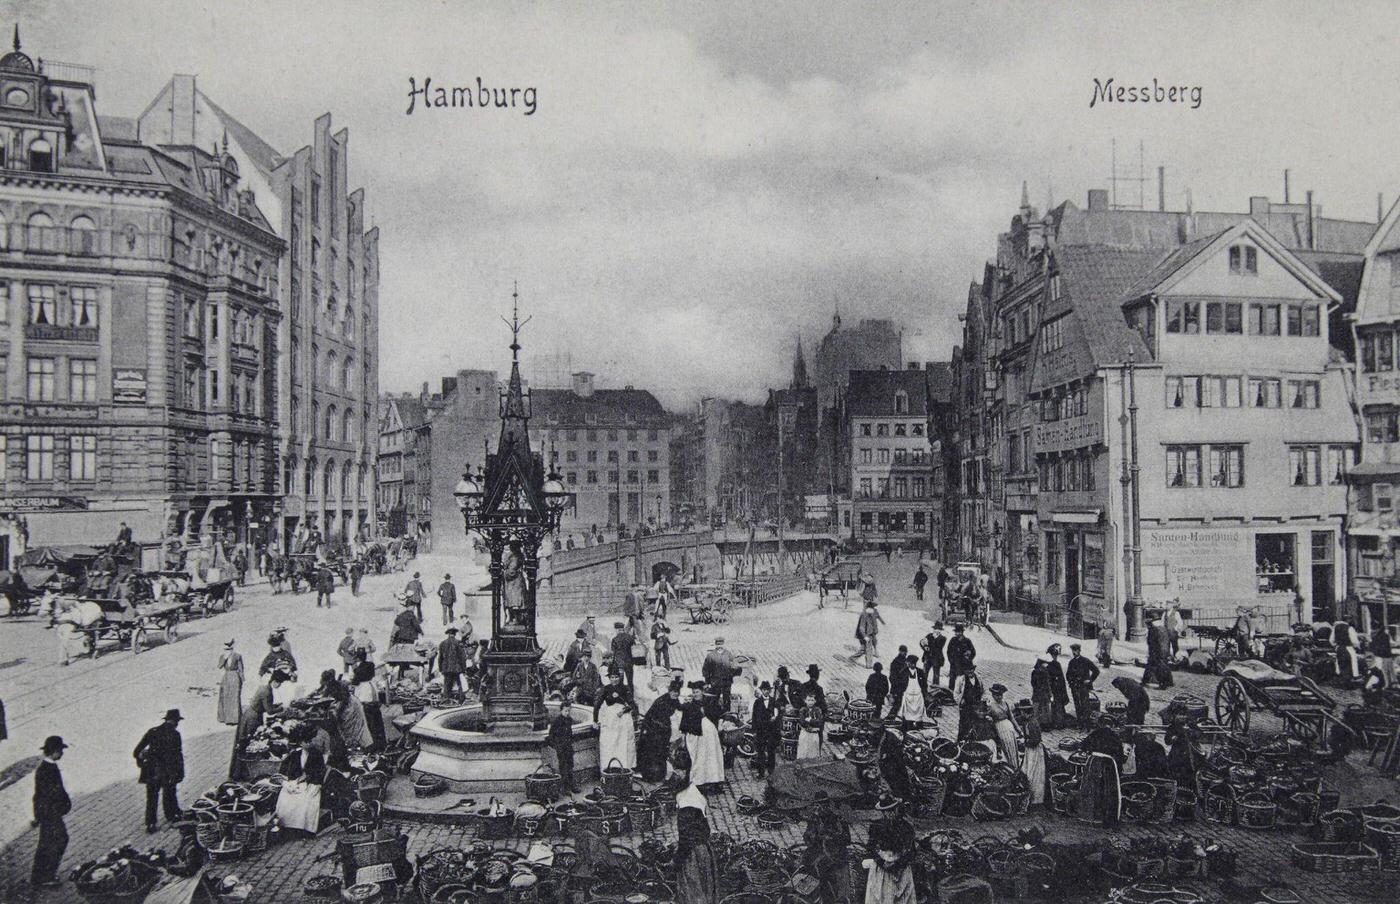 Messberg in Hamburg, Germany, 1910